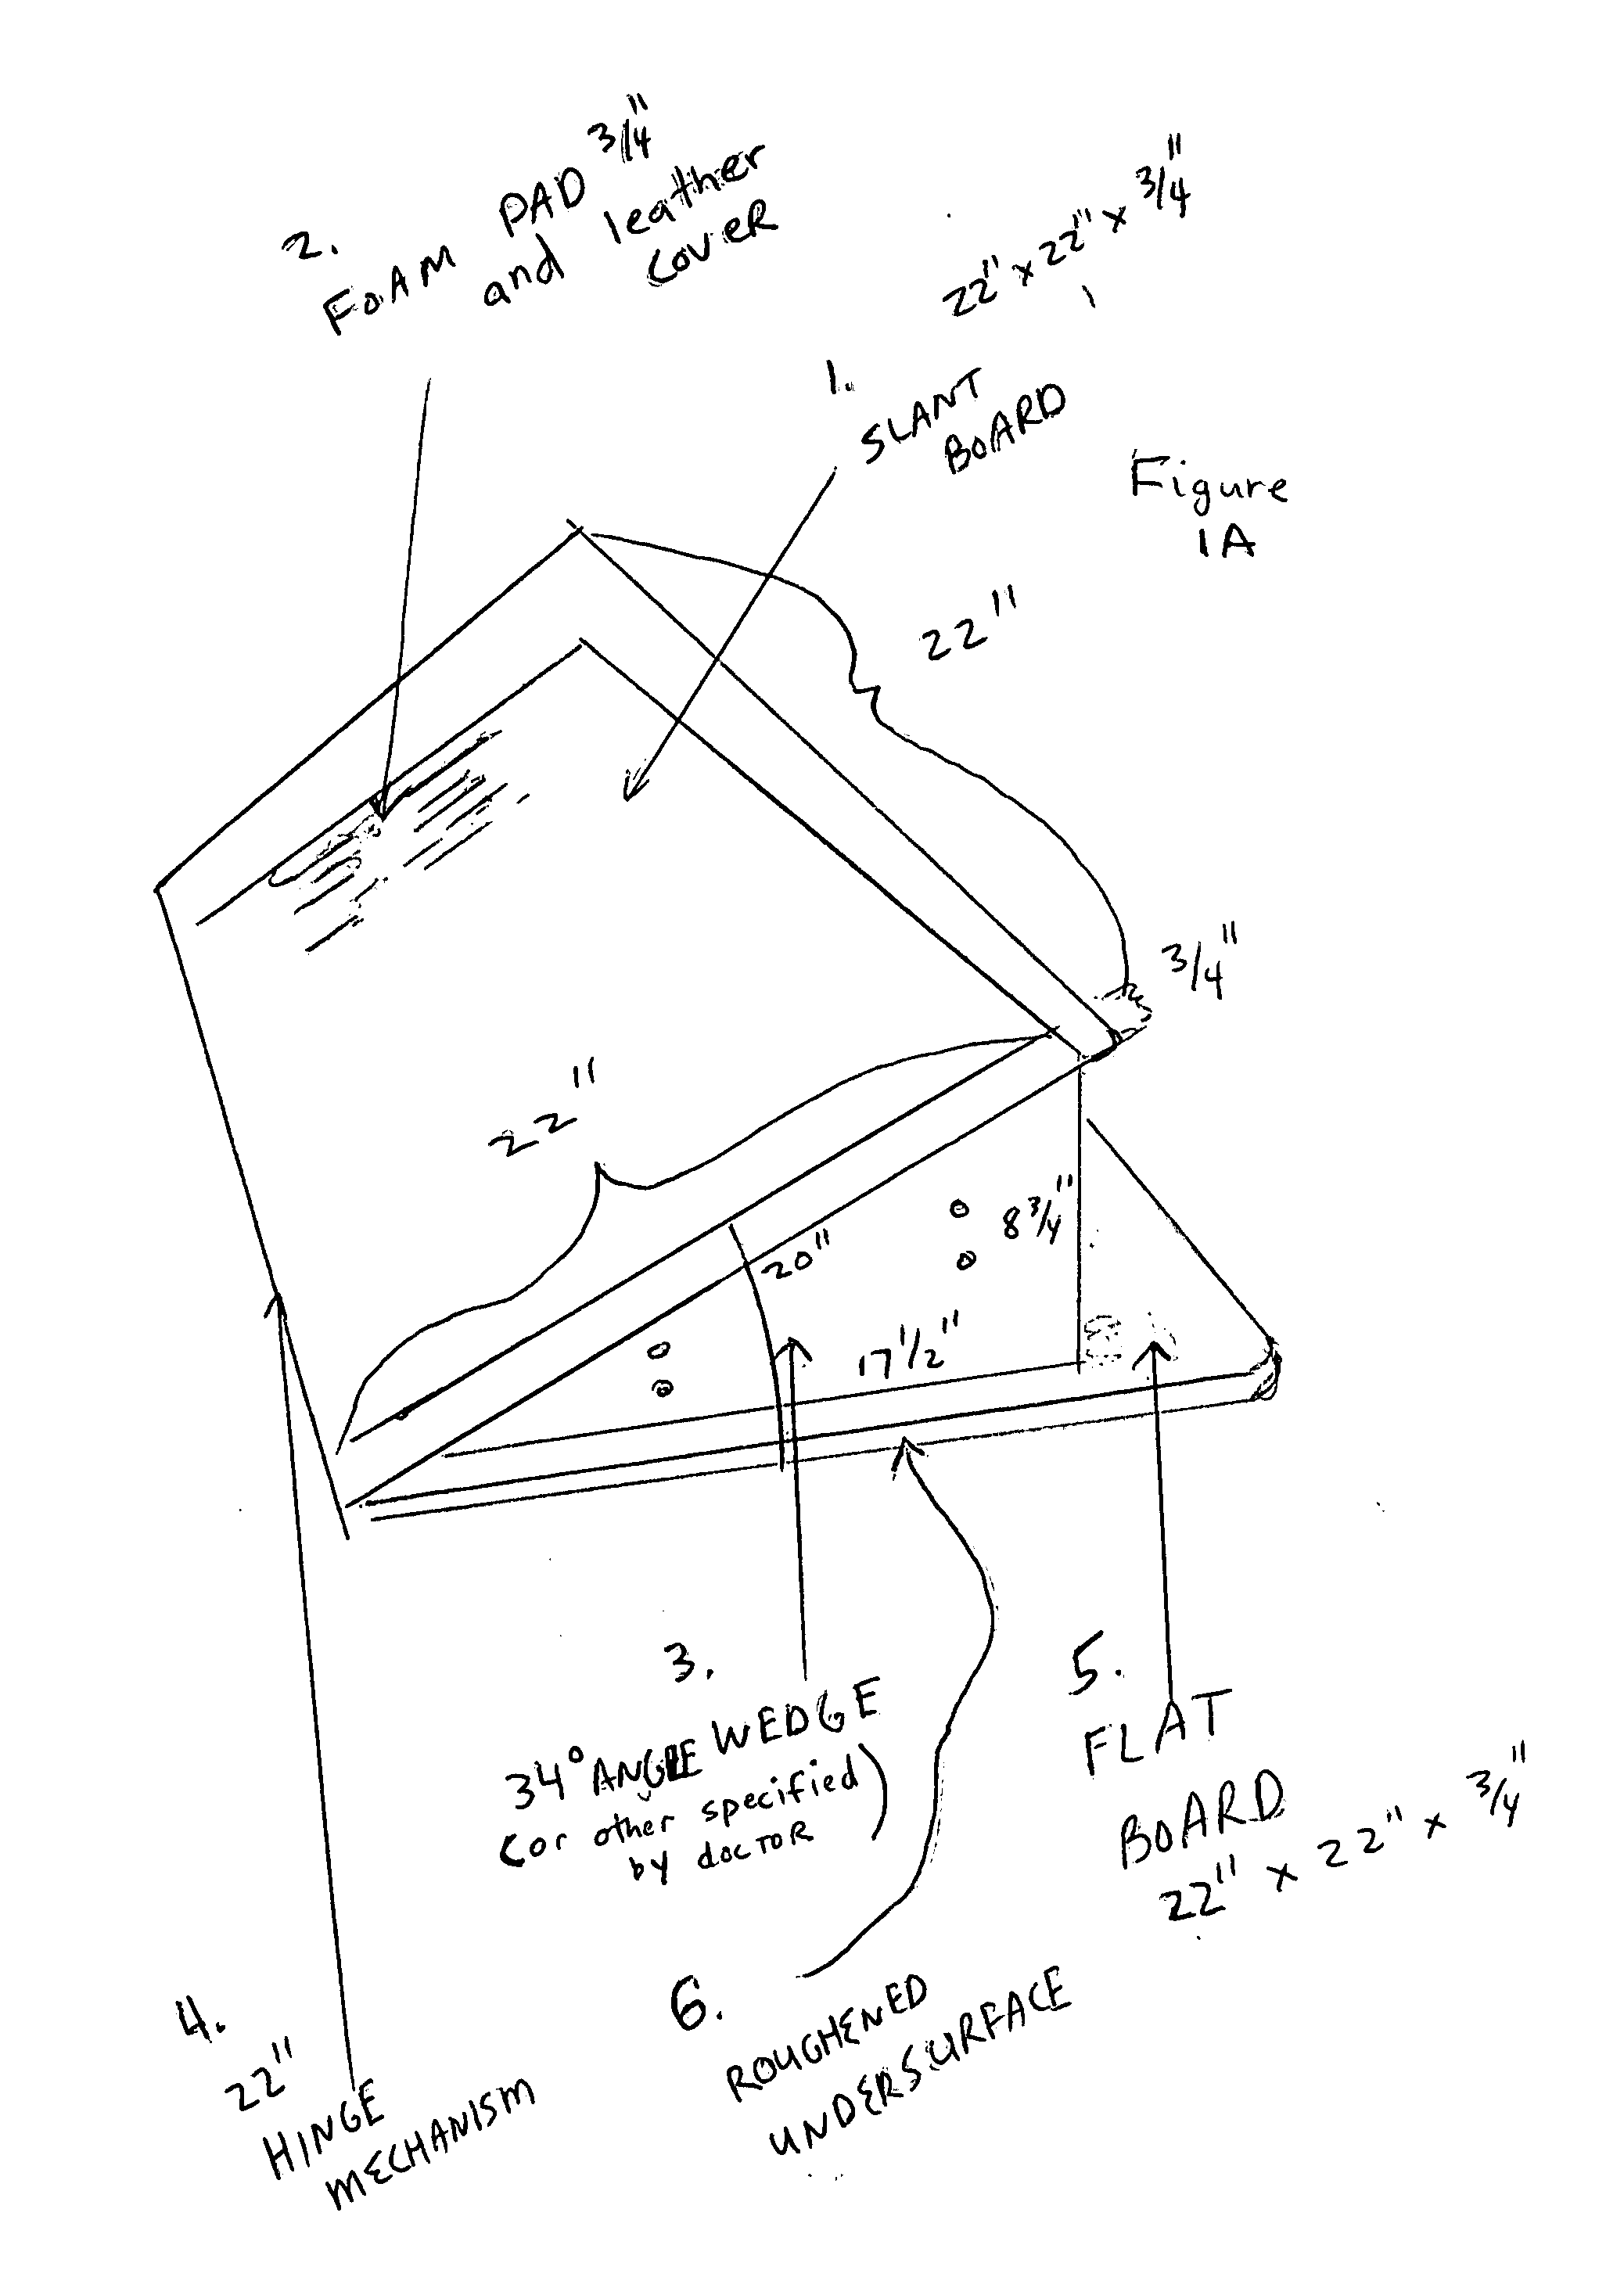 Portable slant board anterior adjusting table